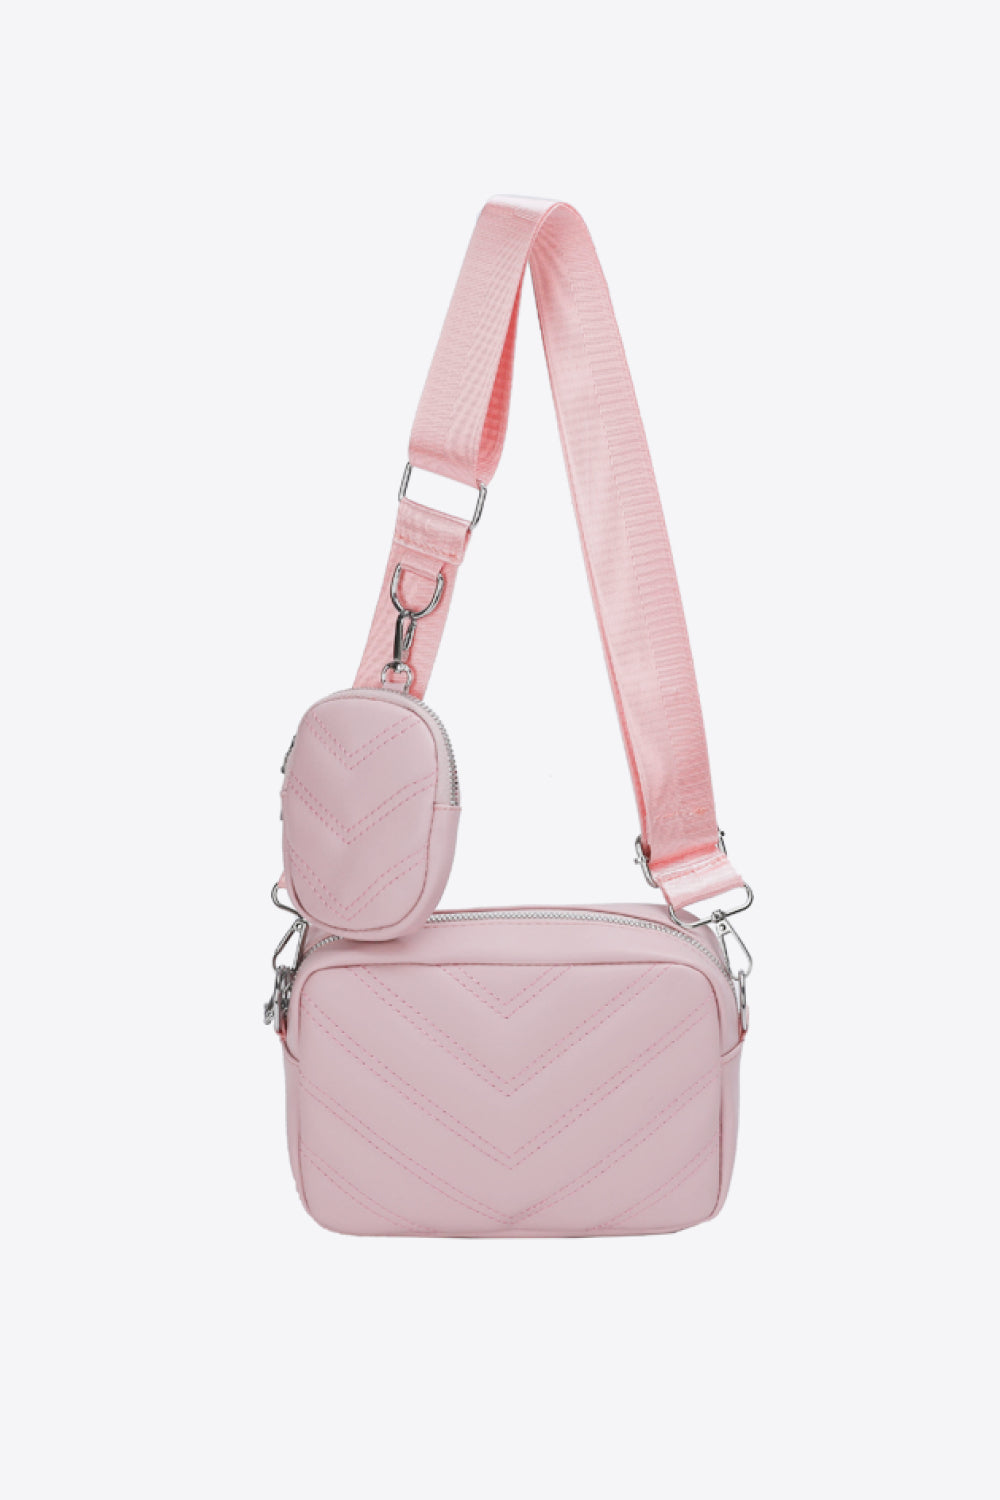 White Smoke Fierce Leather Shoulder Bag with Small Purse Handbags